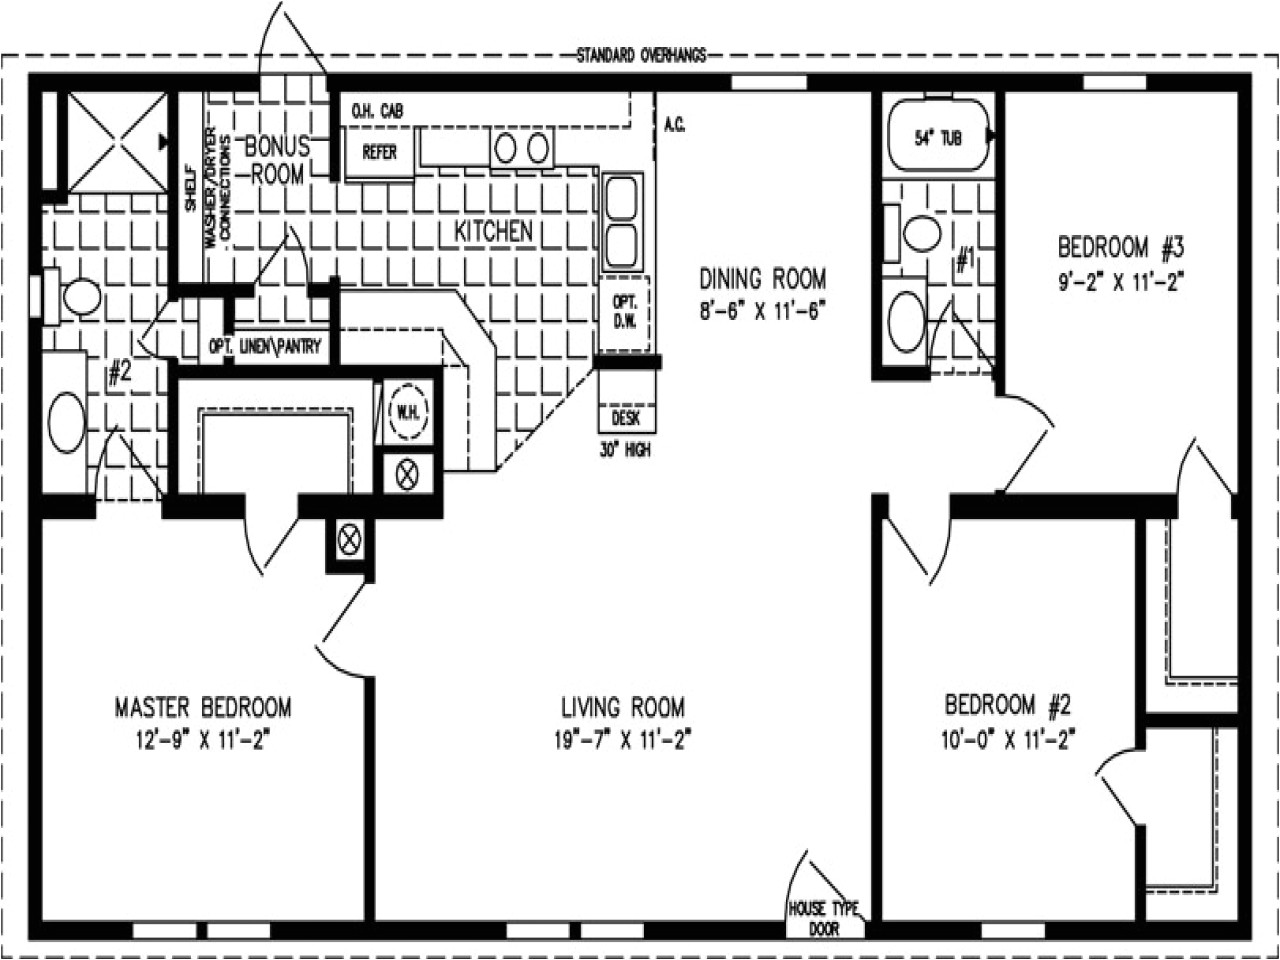 3798207254d1f930 1000 sq ft home kit 1000 sq ft home floor plans